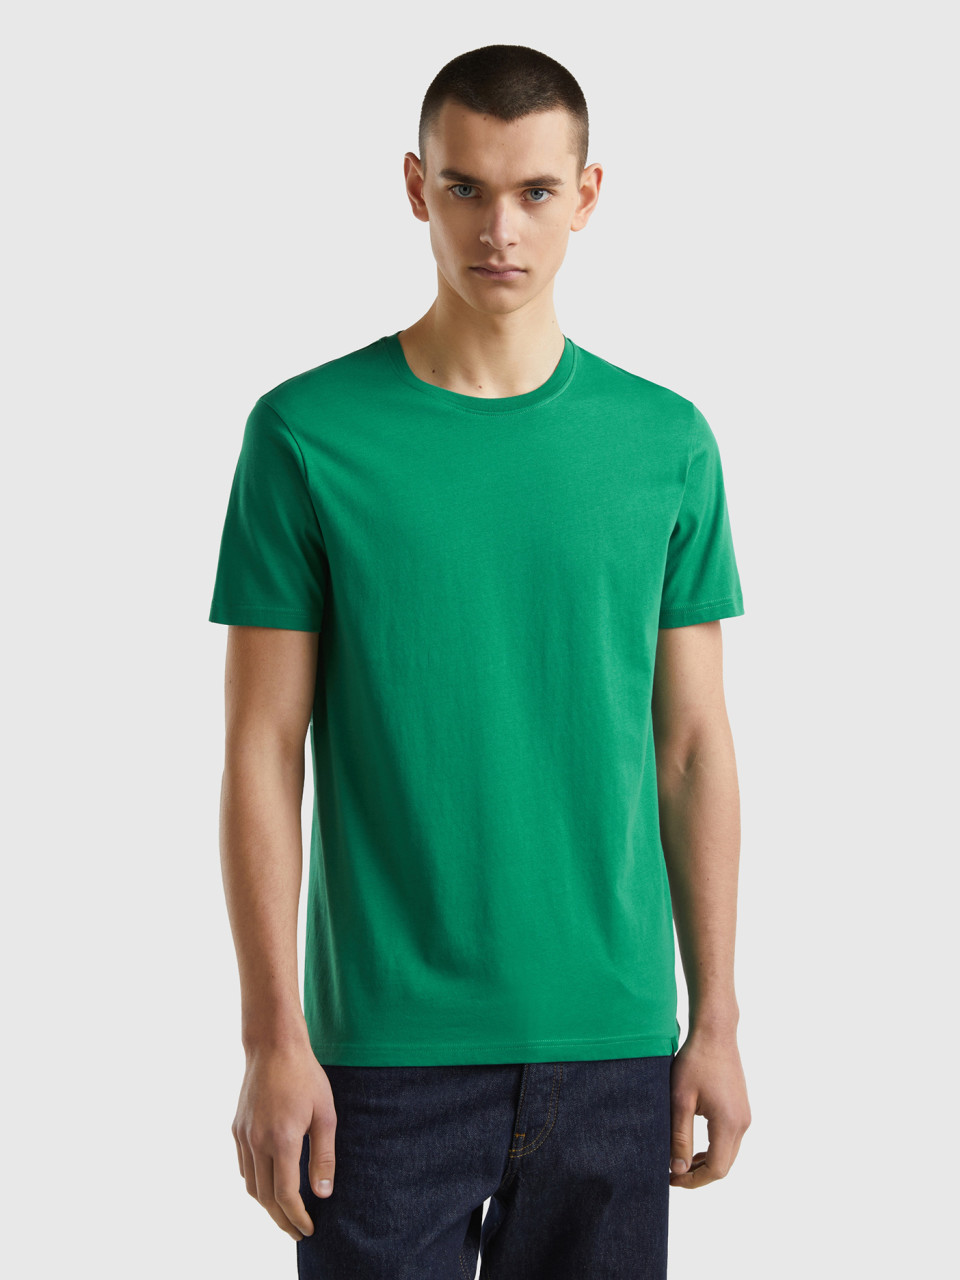 Benetton, T-shirt Verde Scuro, Verde Scuro, Uomo